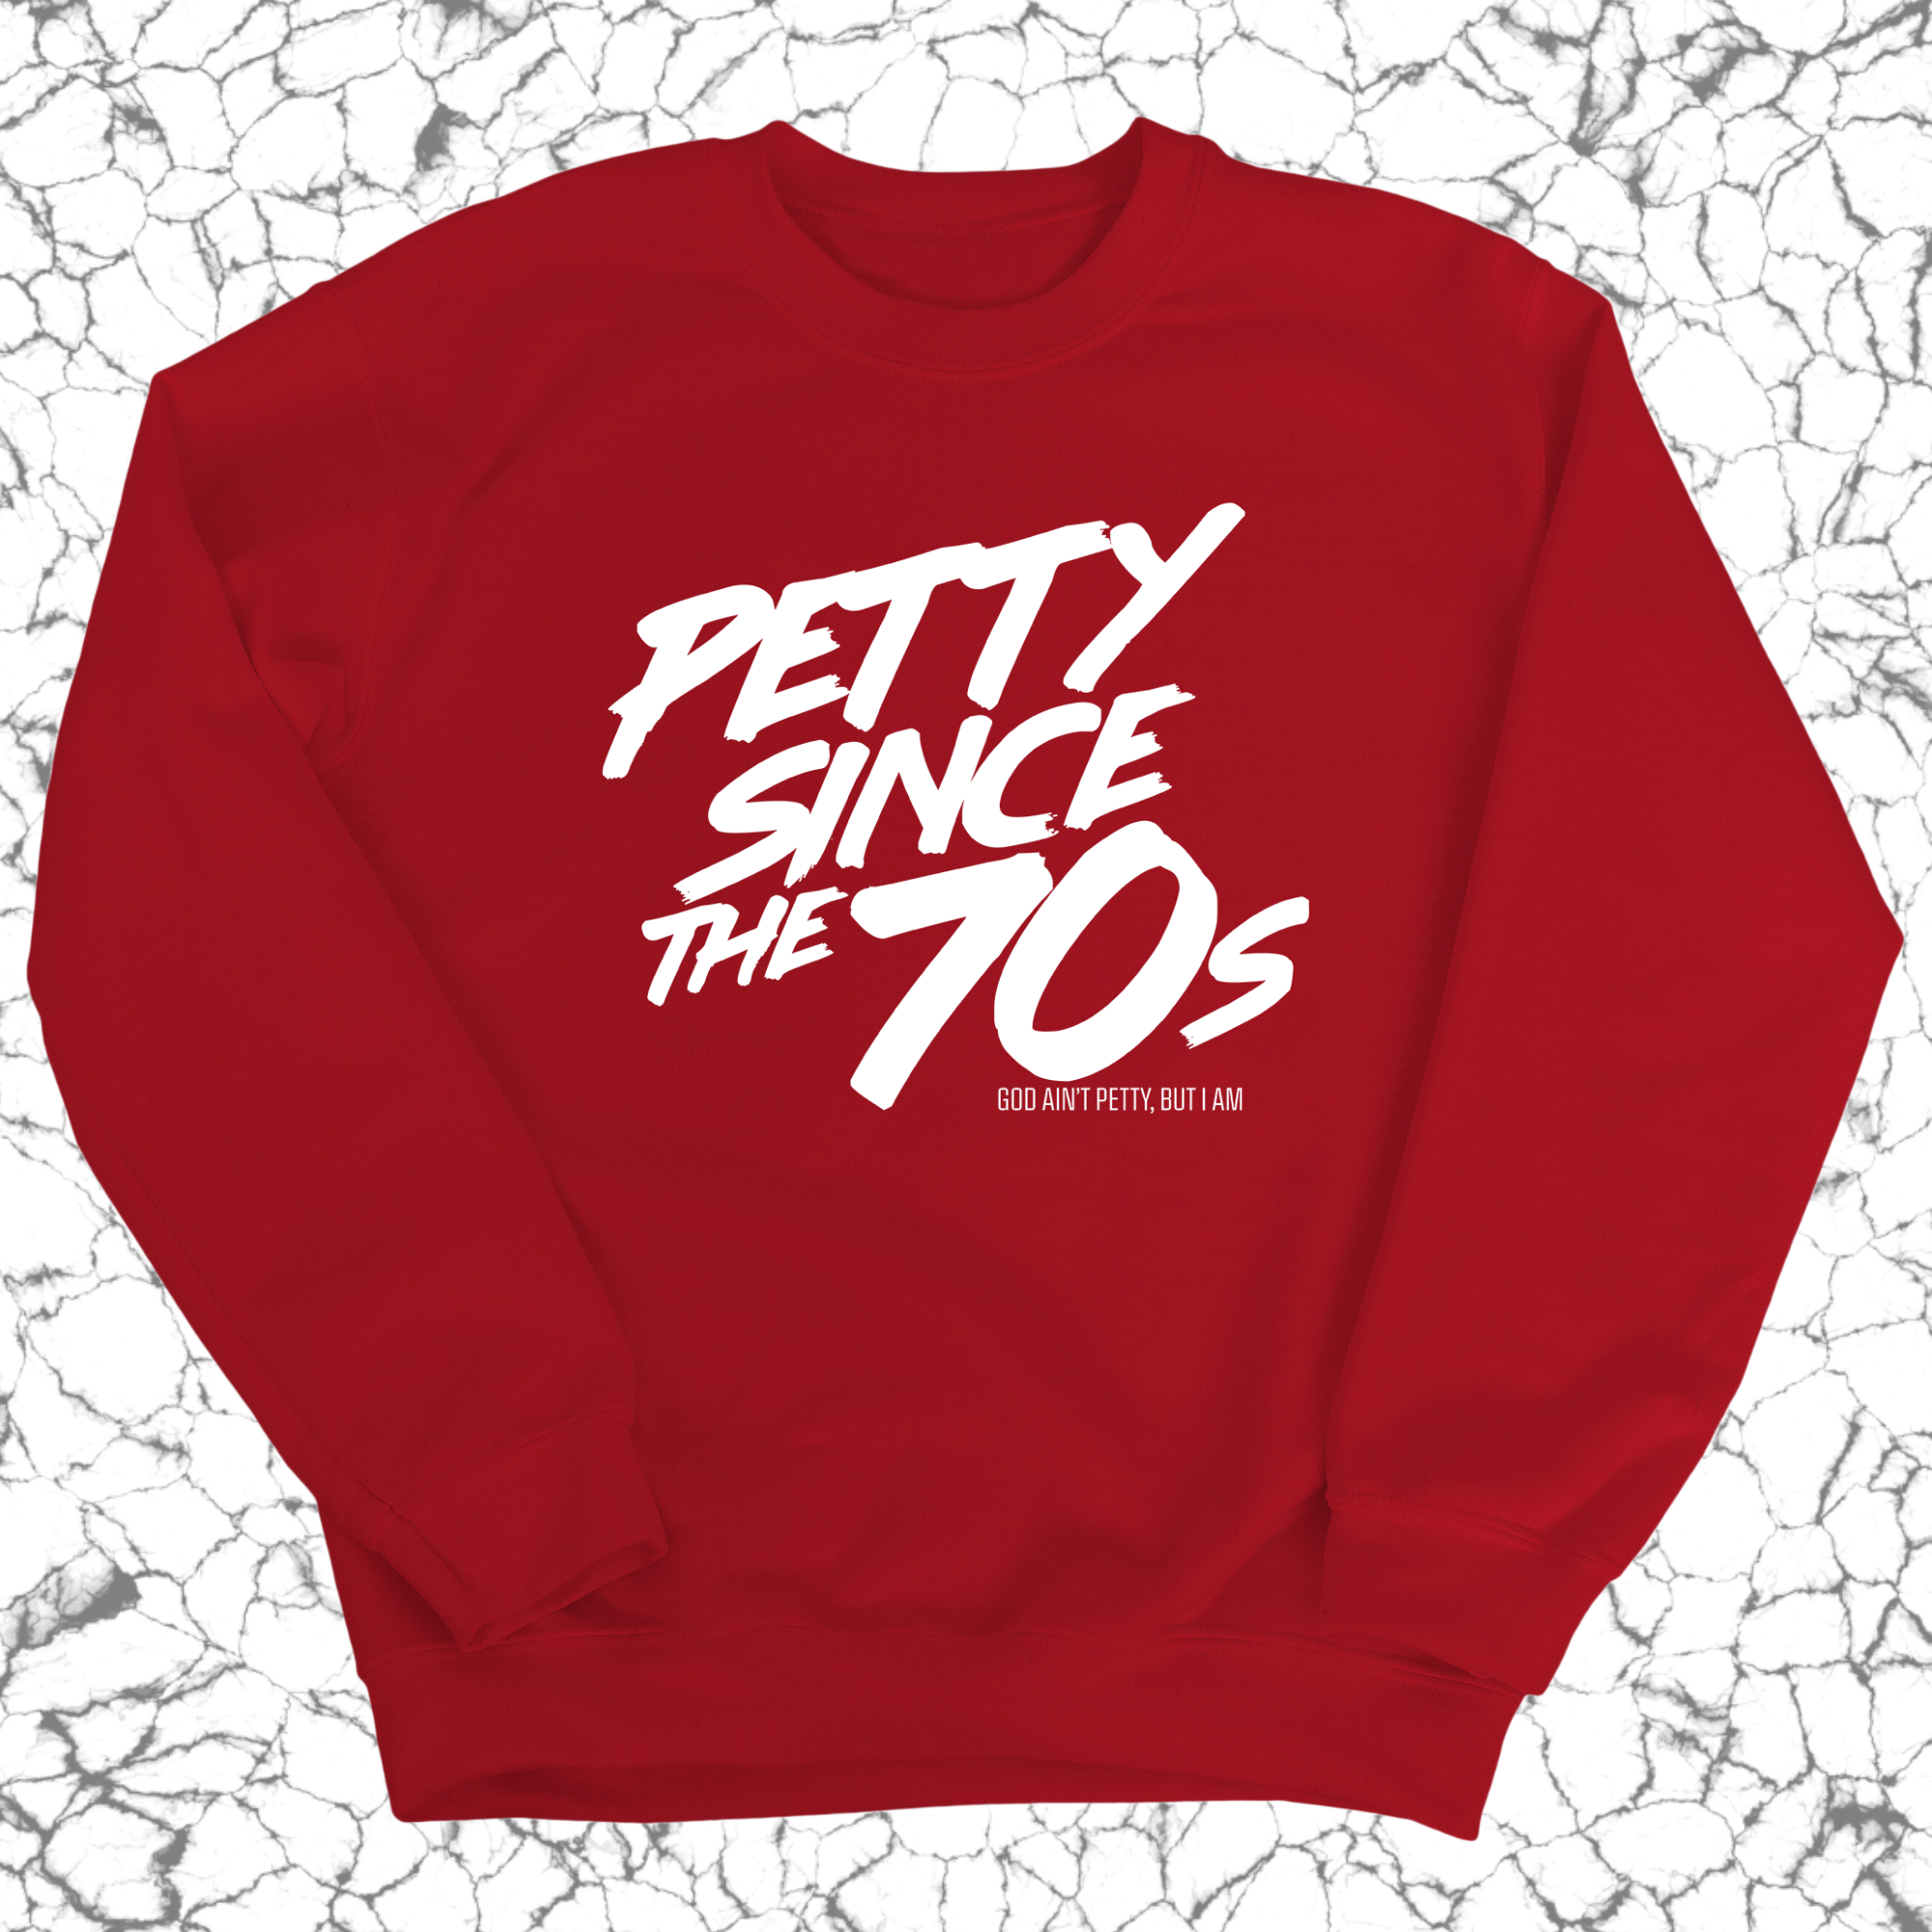 Petty Since the 70s Sweatshirt Unisex Sweatshirt-Sweatshirt-The Original God Ain't Petty But I Am